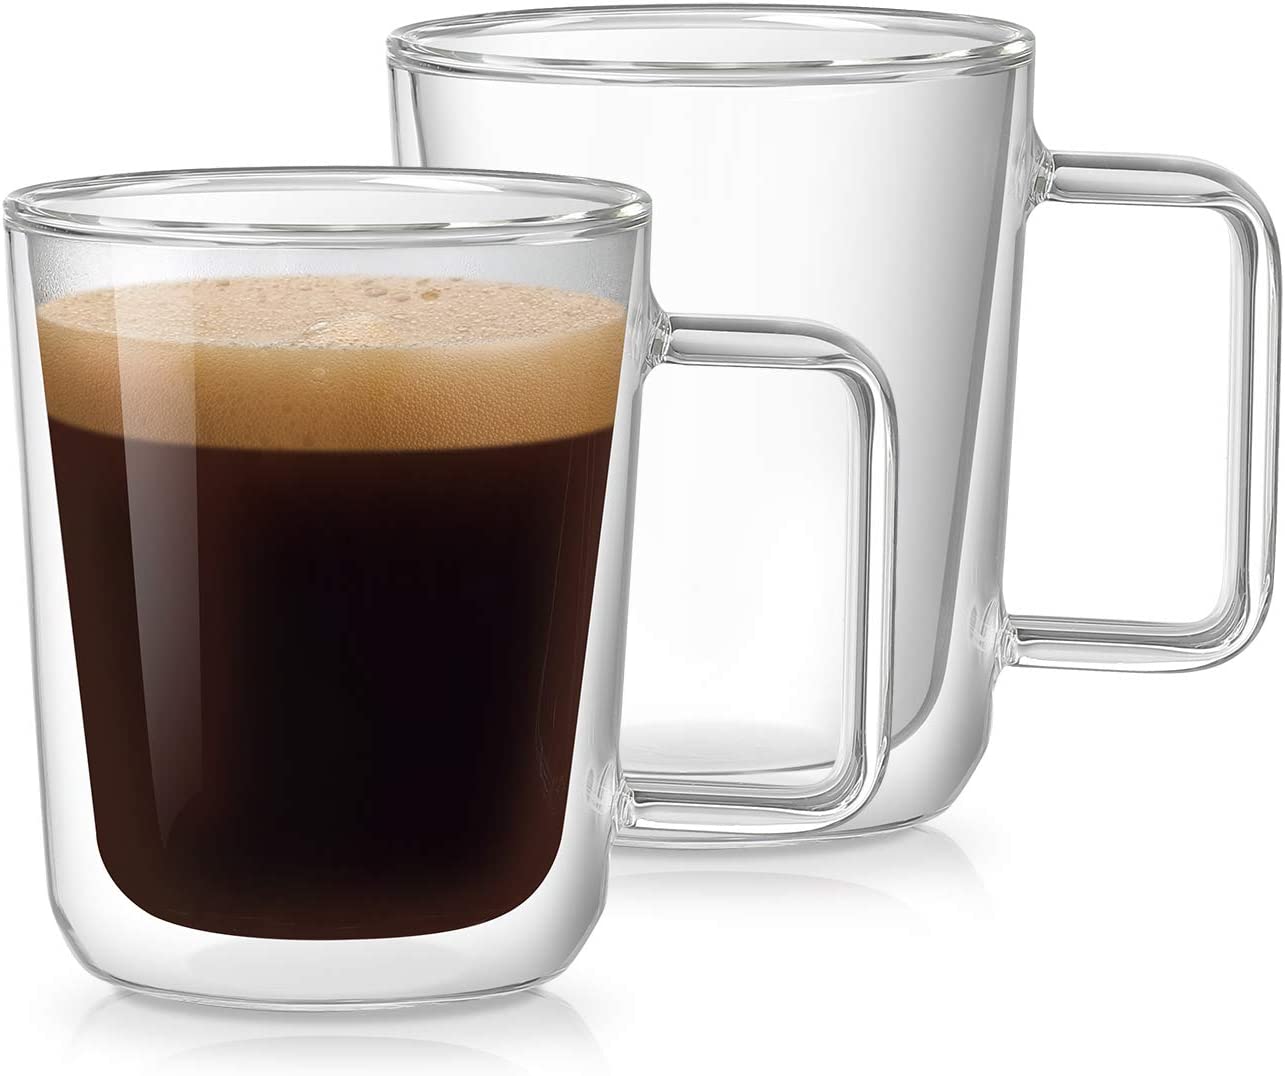  Aquach Double Wall Glass Coffee Mug 12 oz, Large Clear